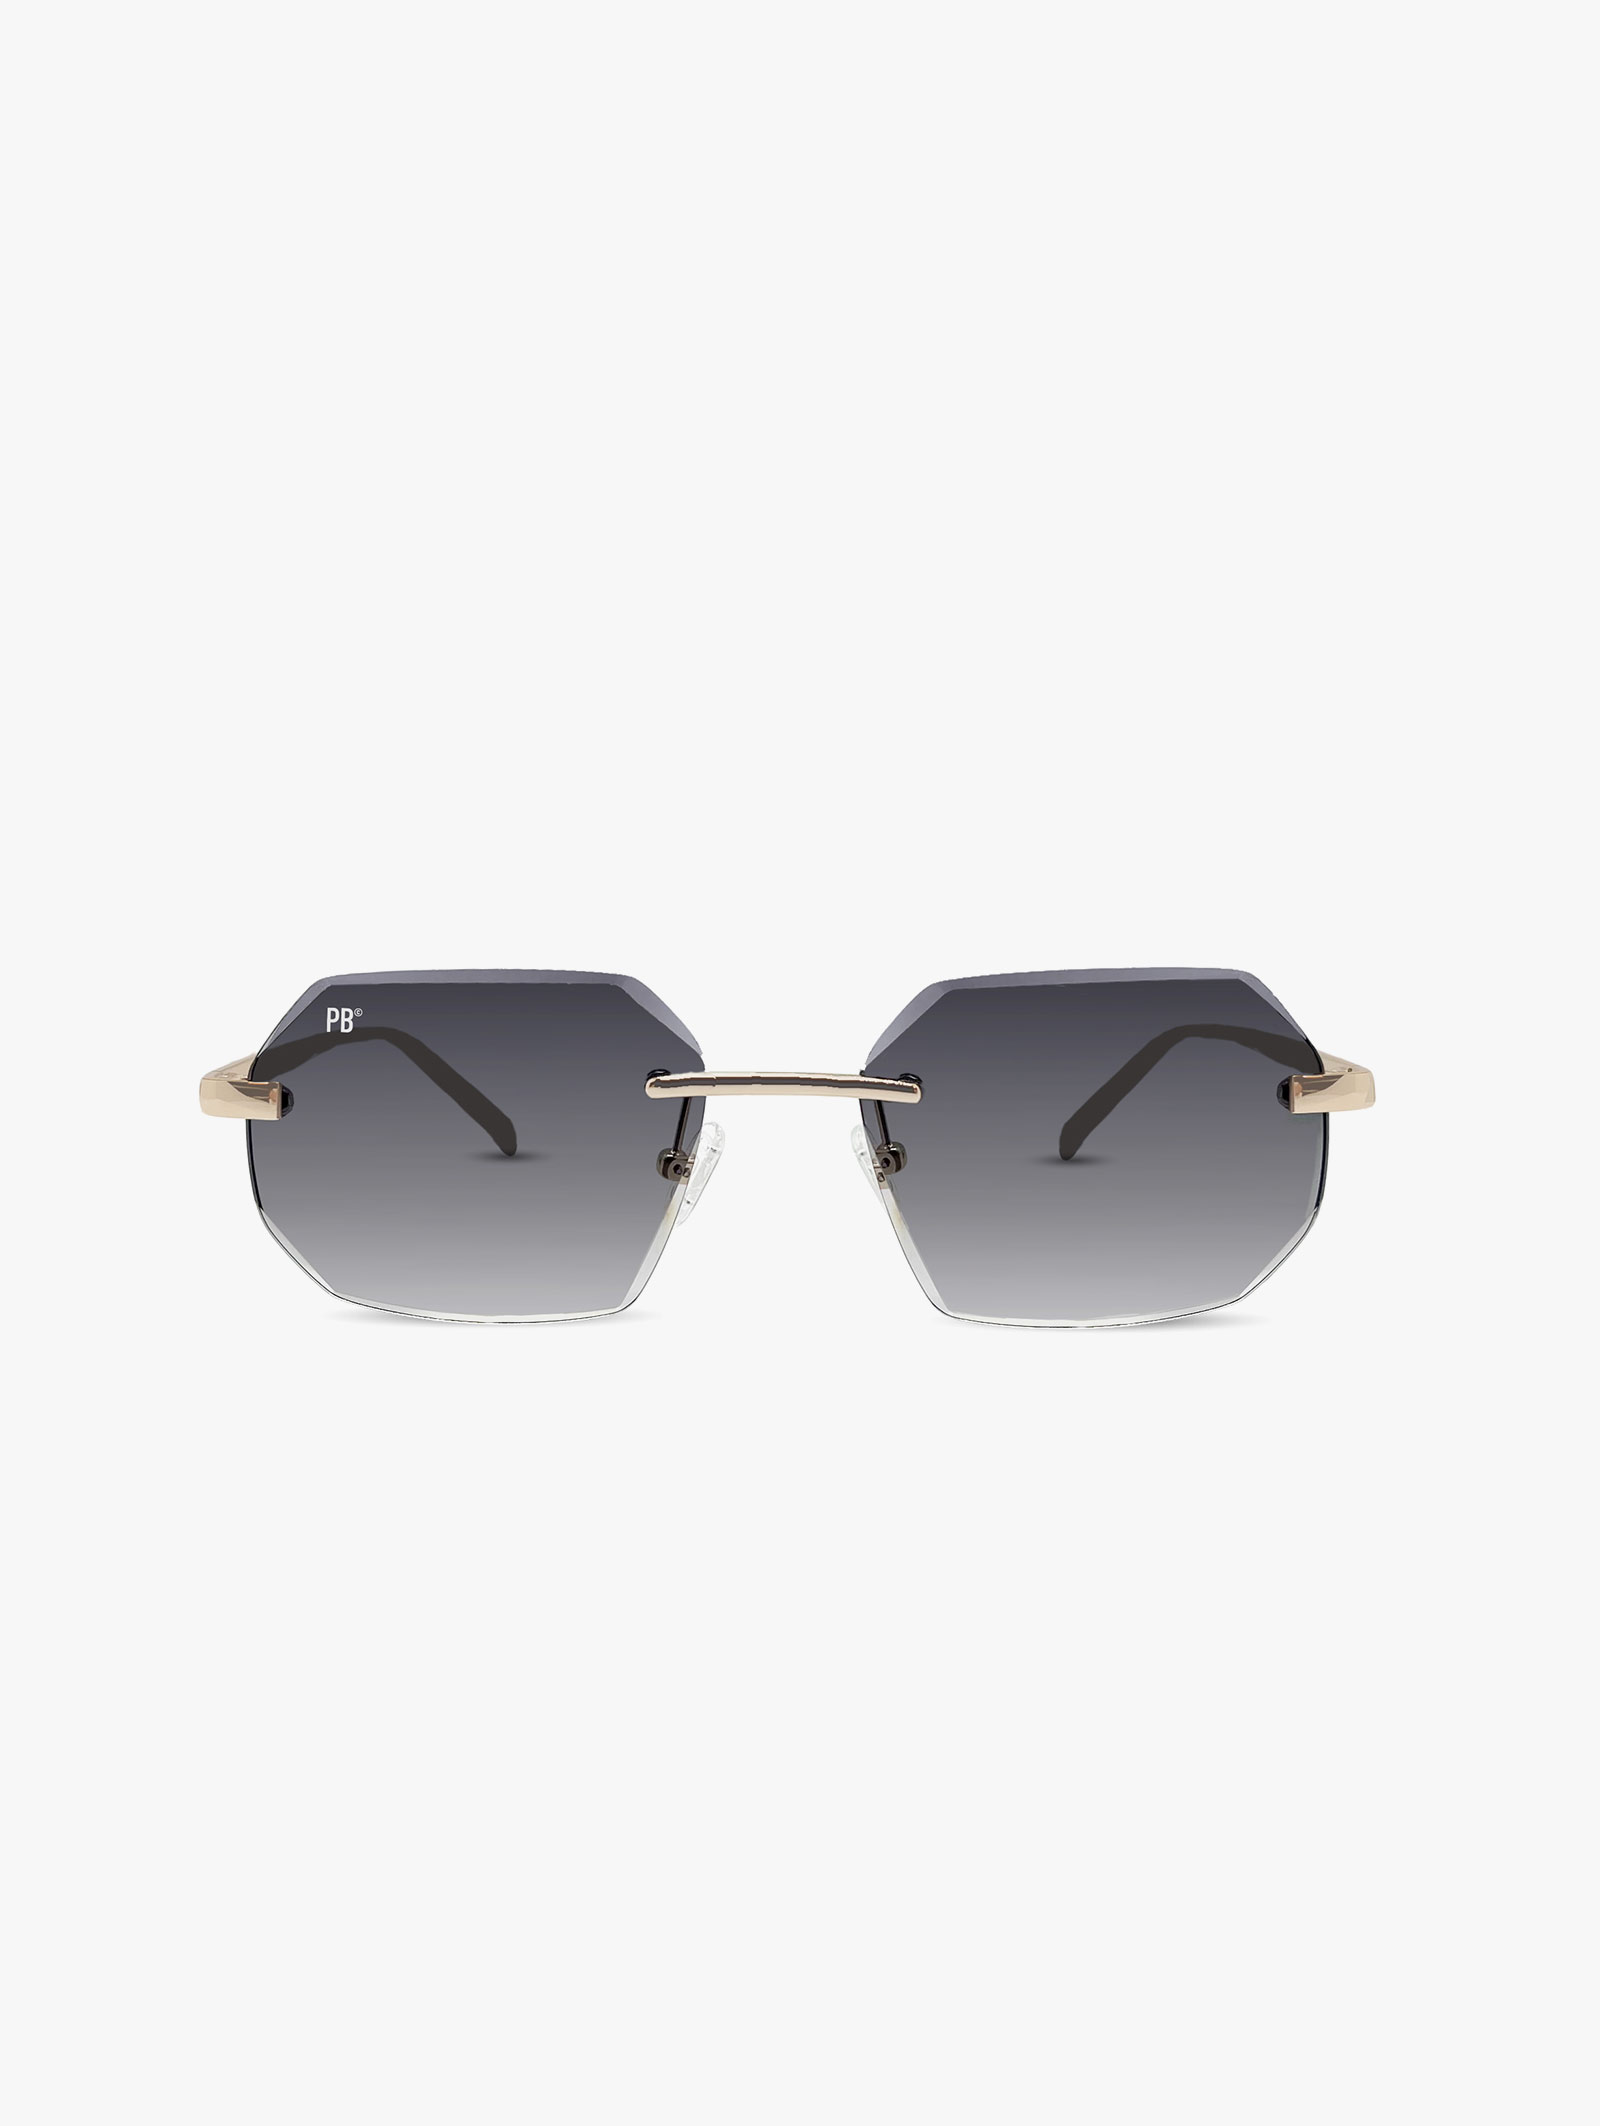 entiteit smeren Trek Sierra Gradient Grey - Pillenbrillen - De perfecte festival zonnebril